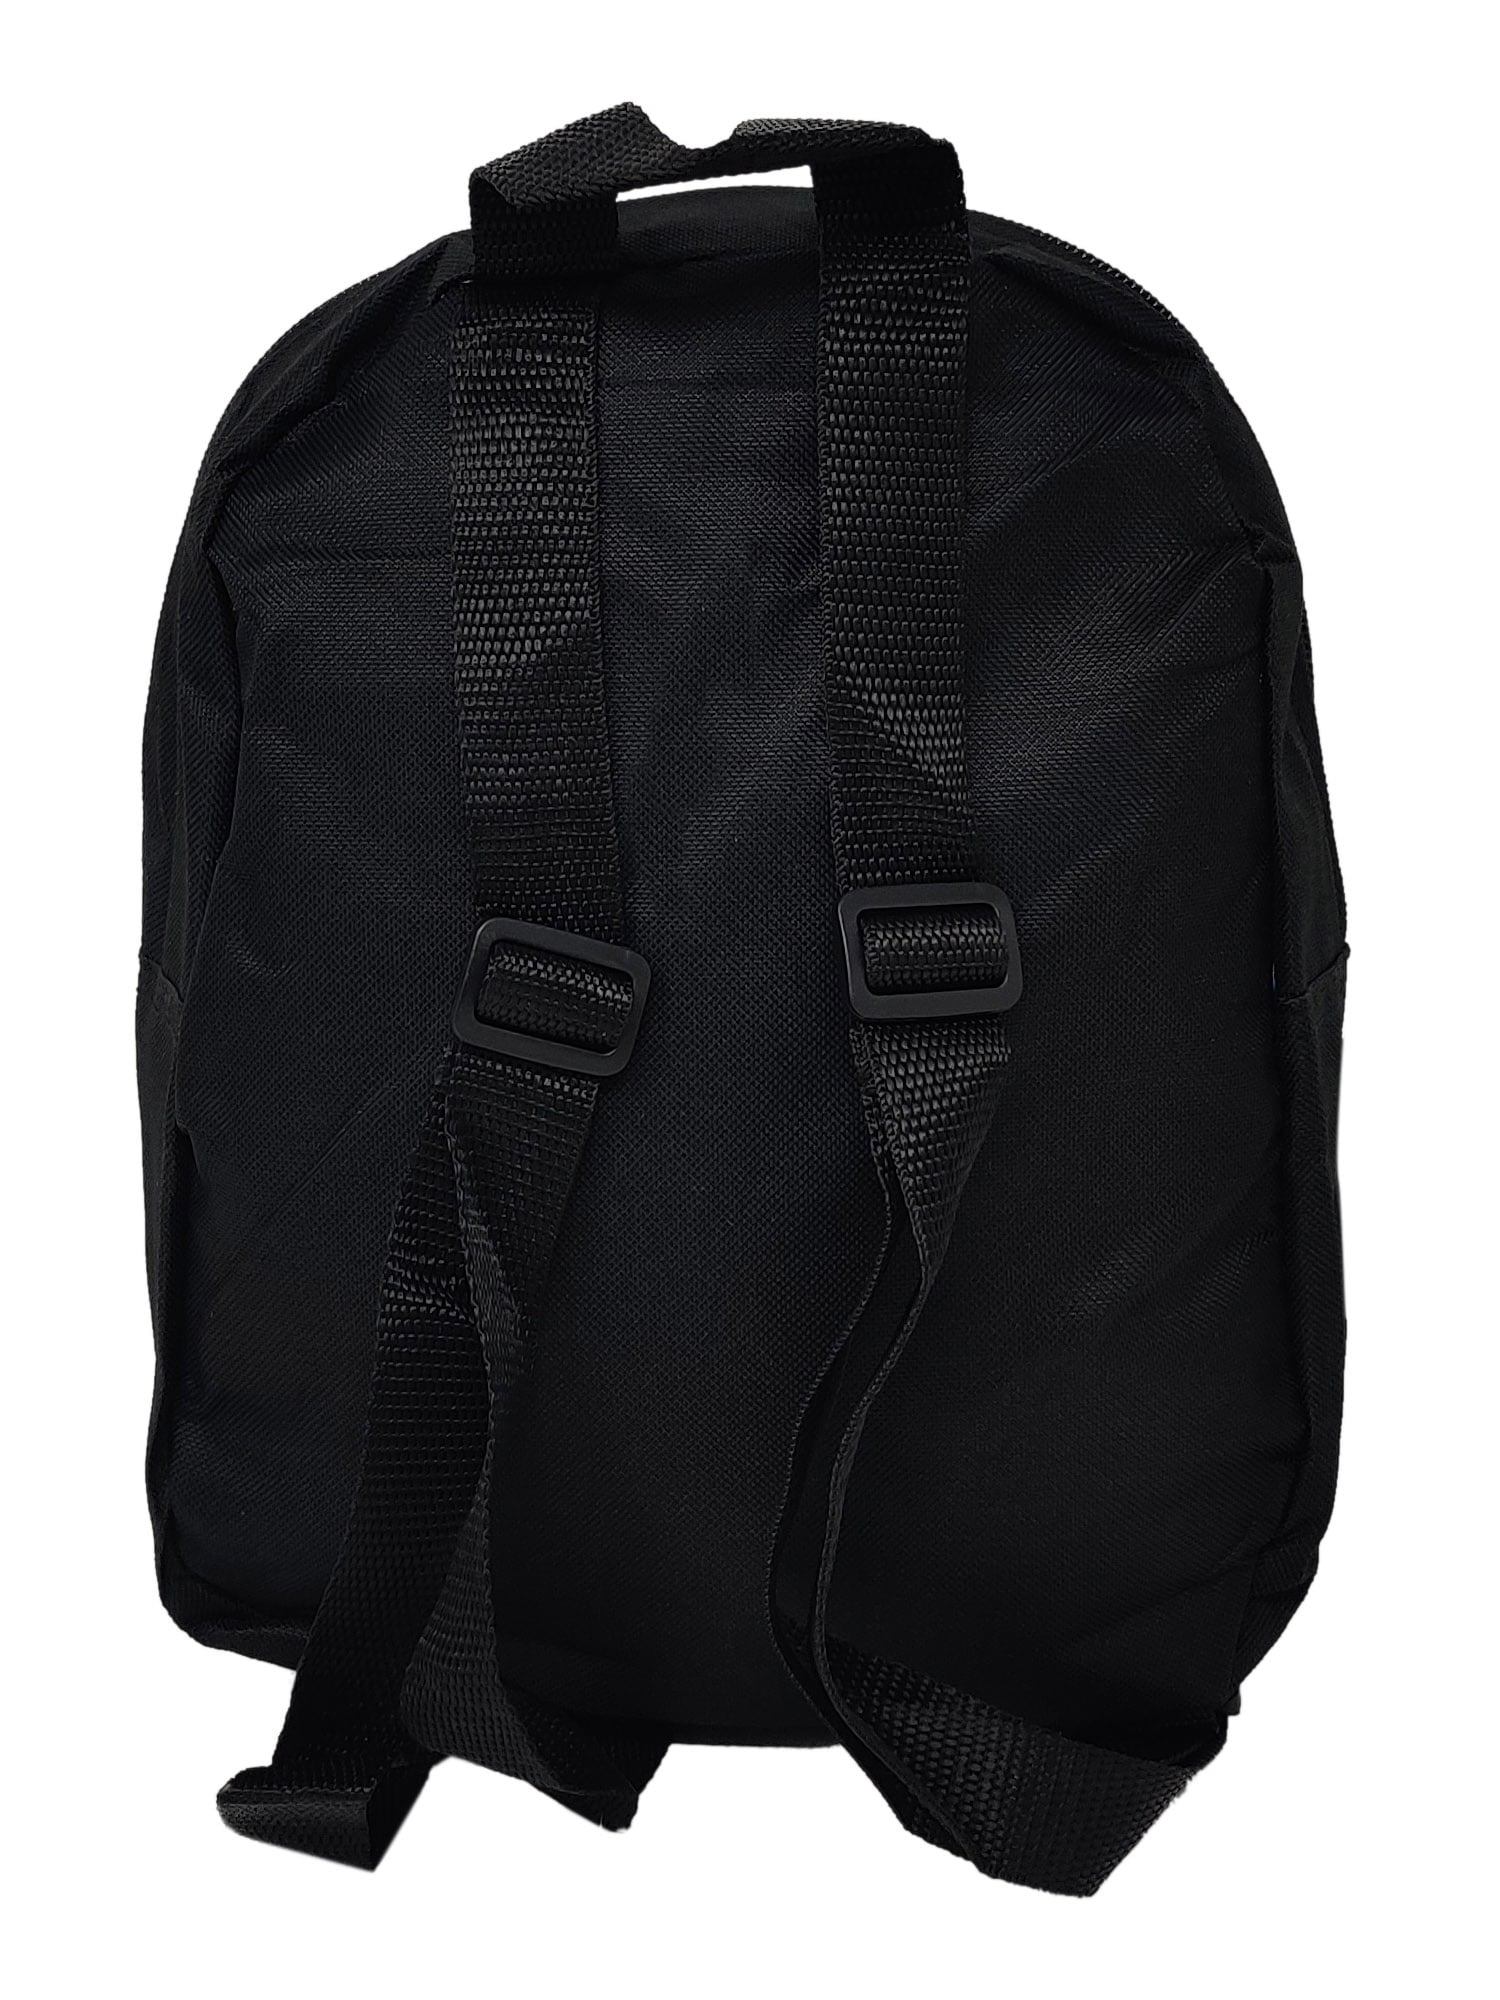 RALME Friends Backpack for Kids, Teens, or Women - Large 16 inch, Black